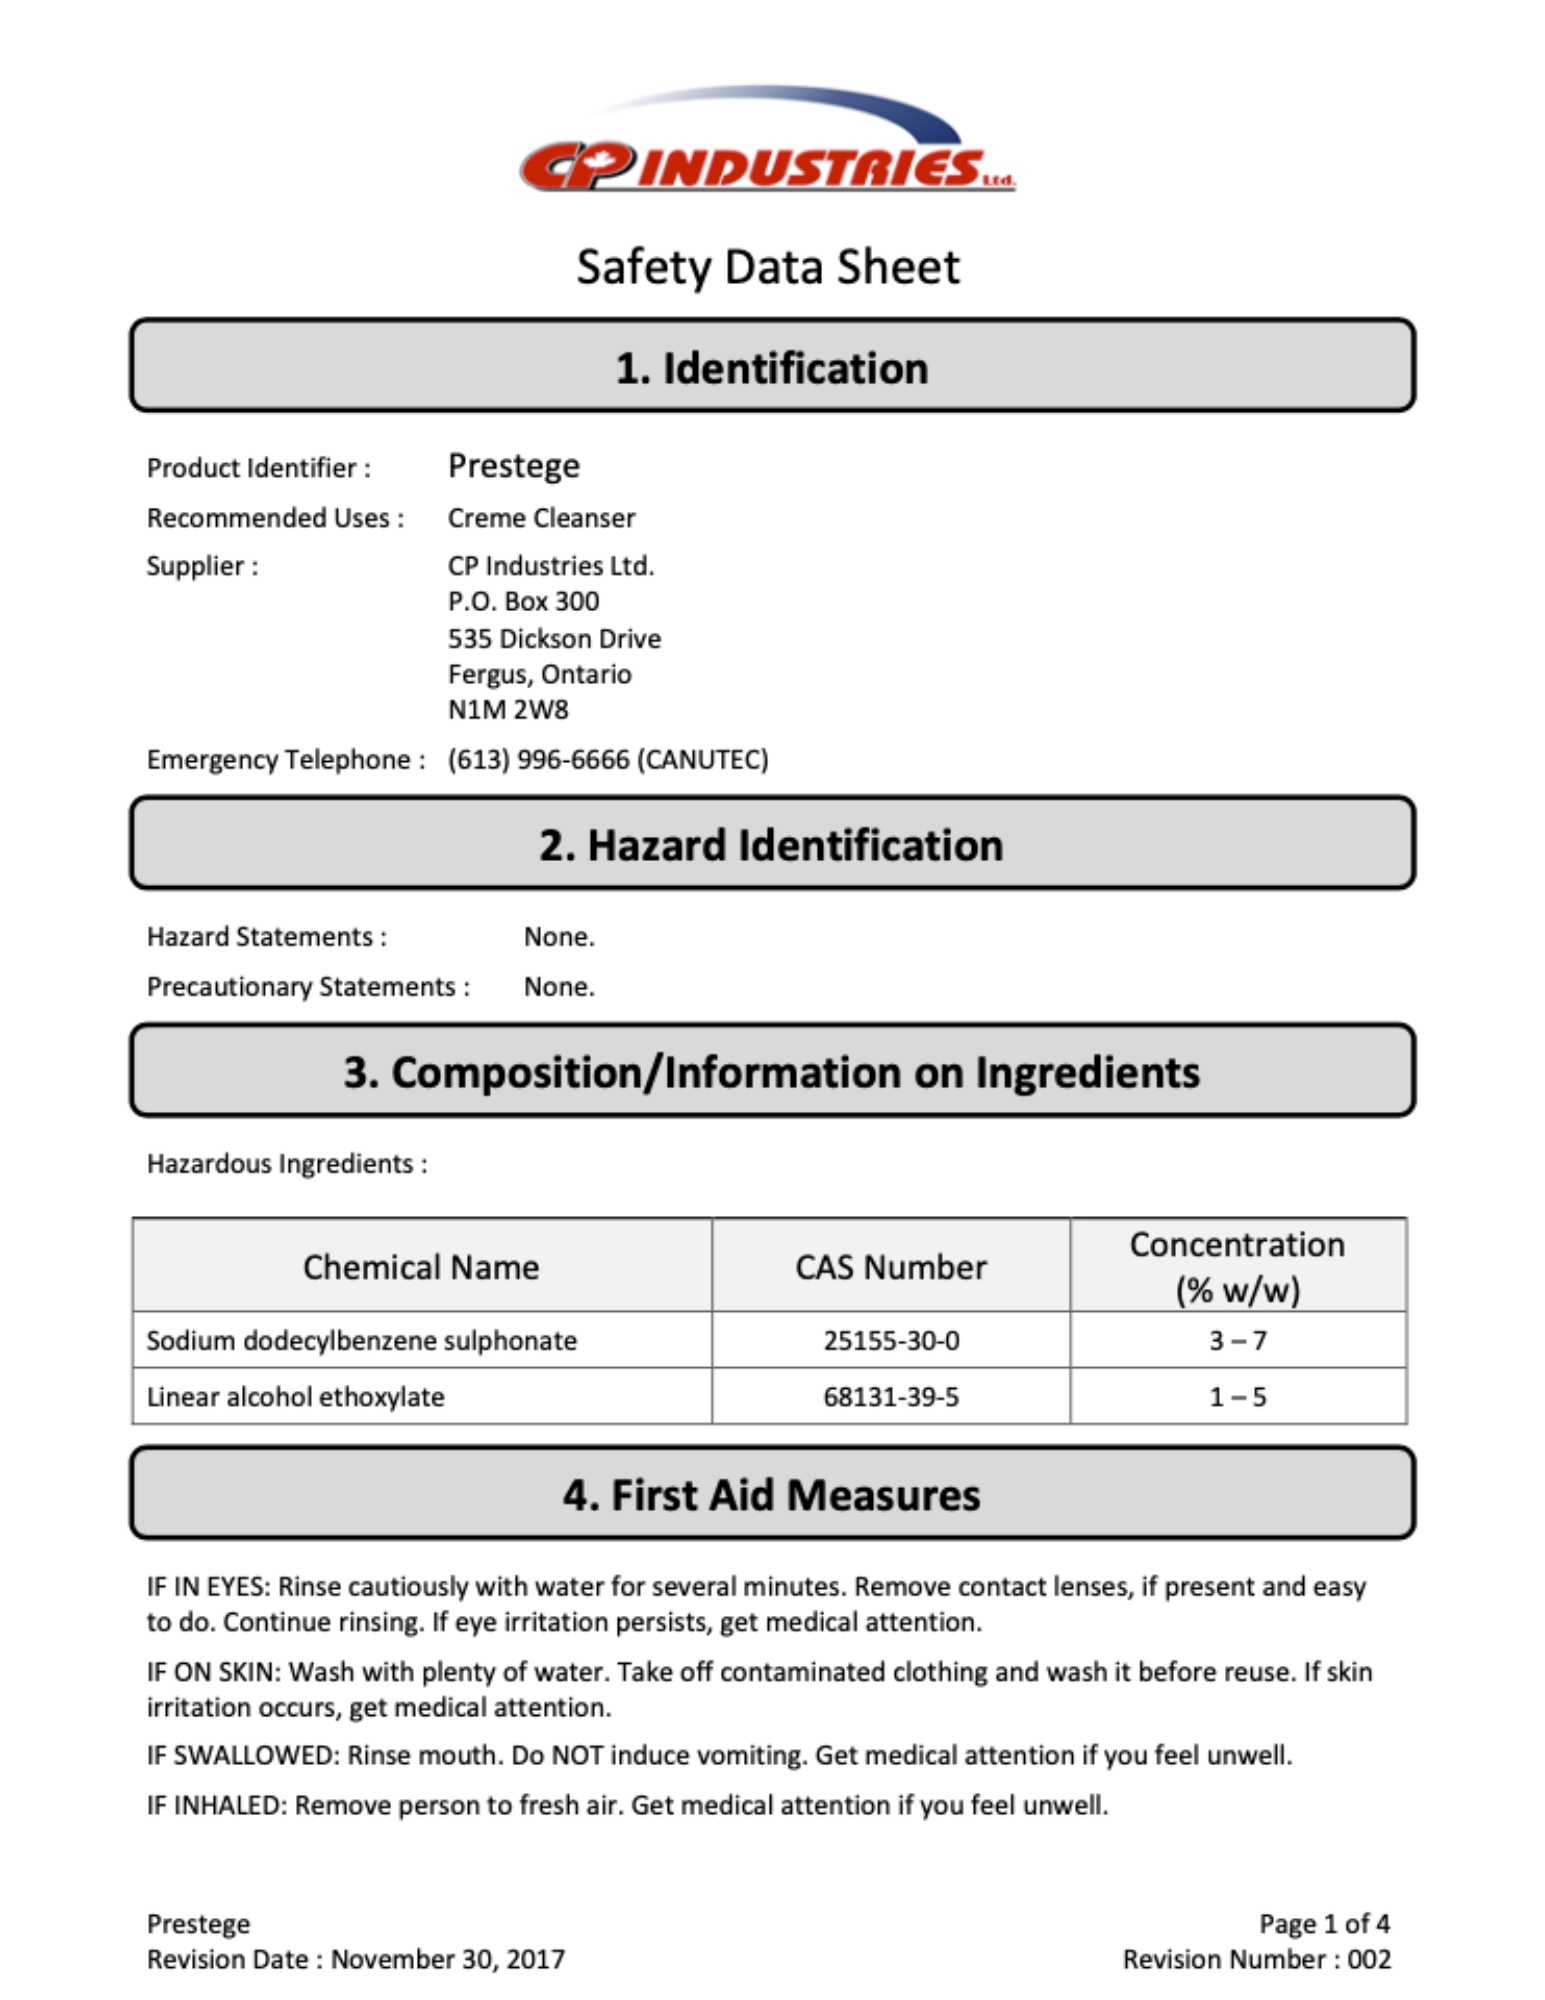 Safety Data Sheet of CP Industries Prestege.